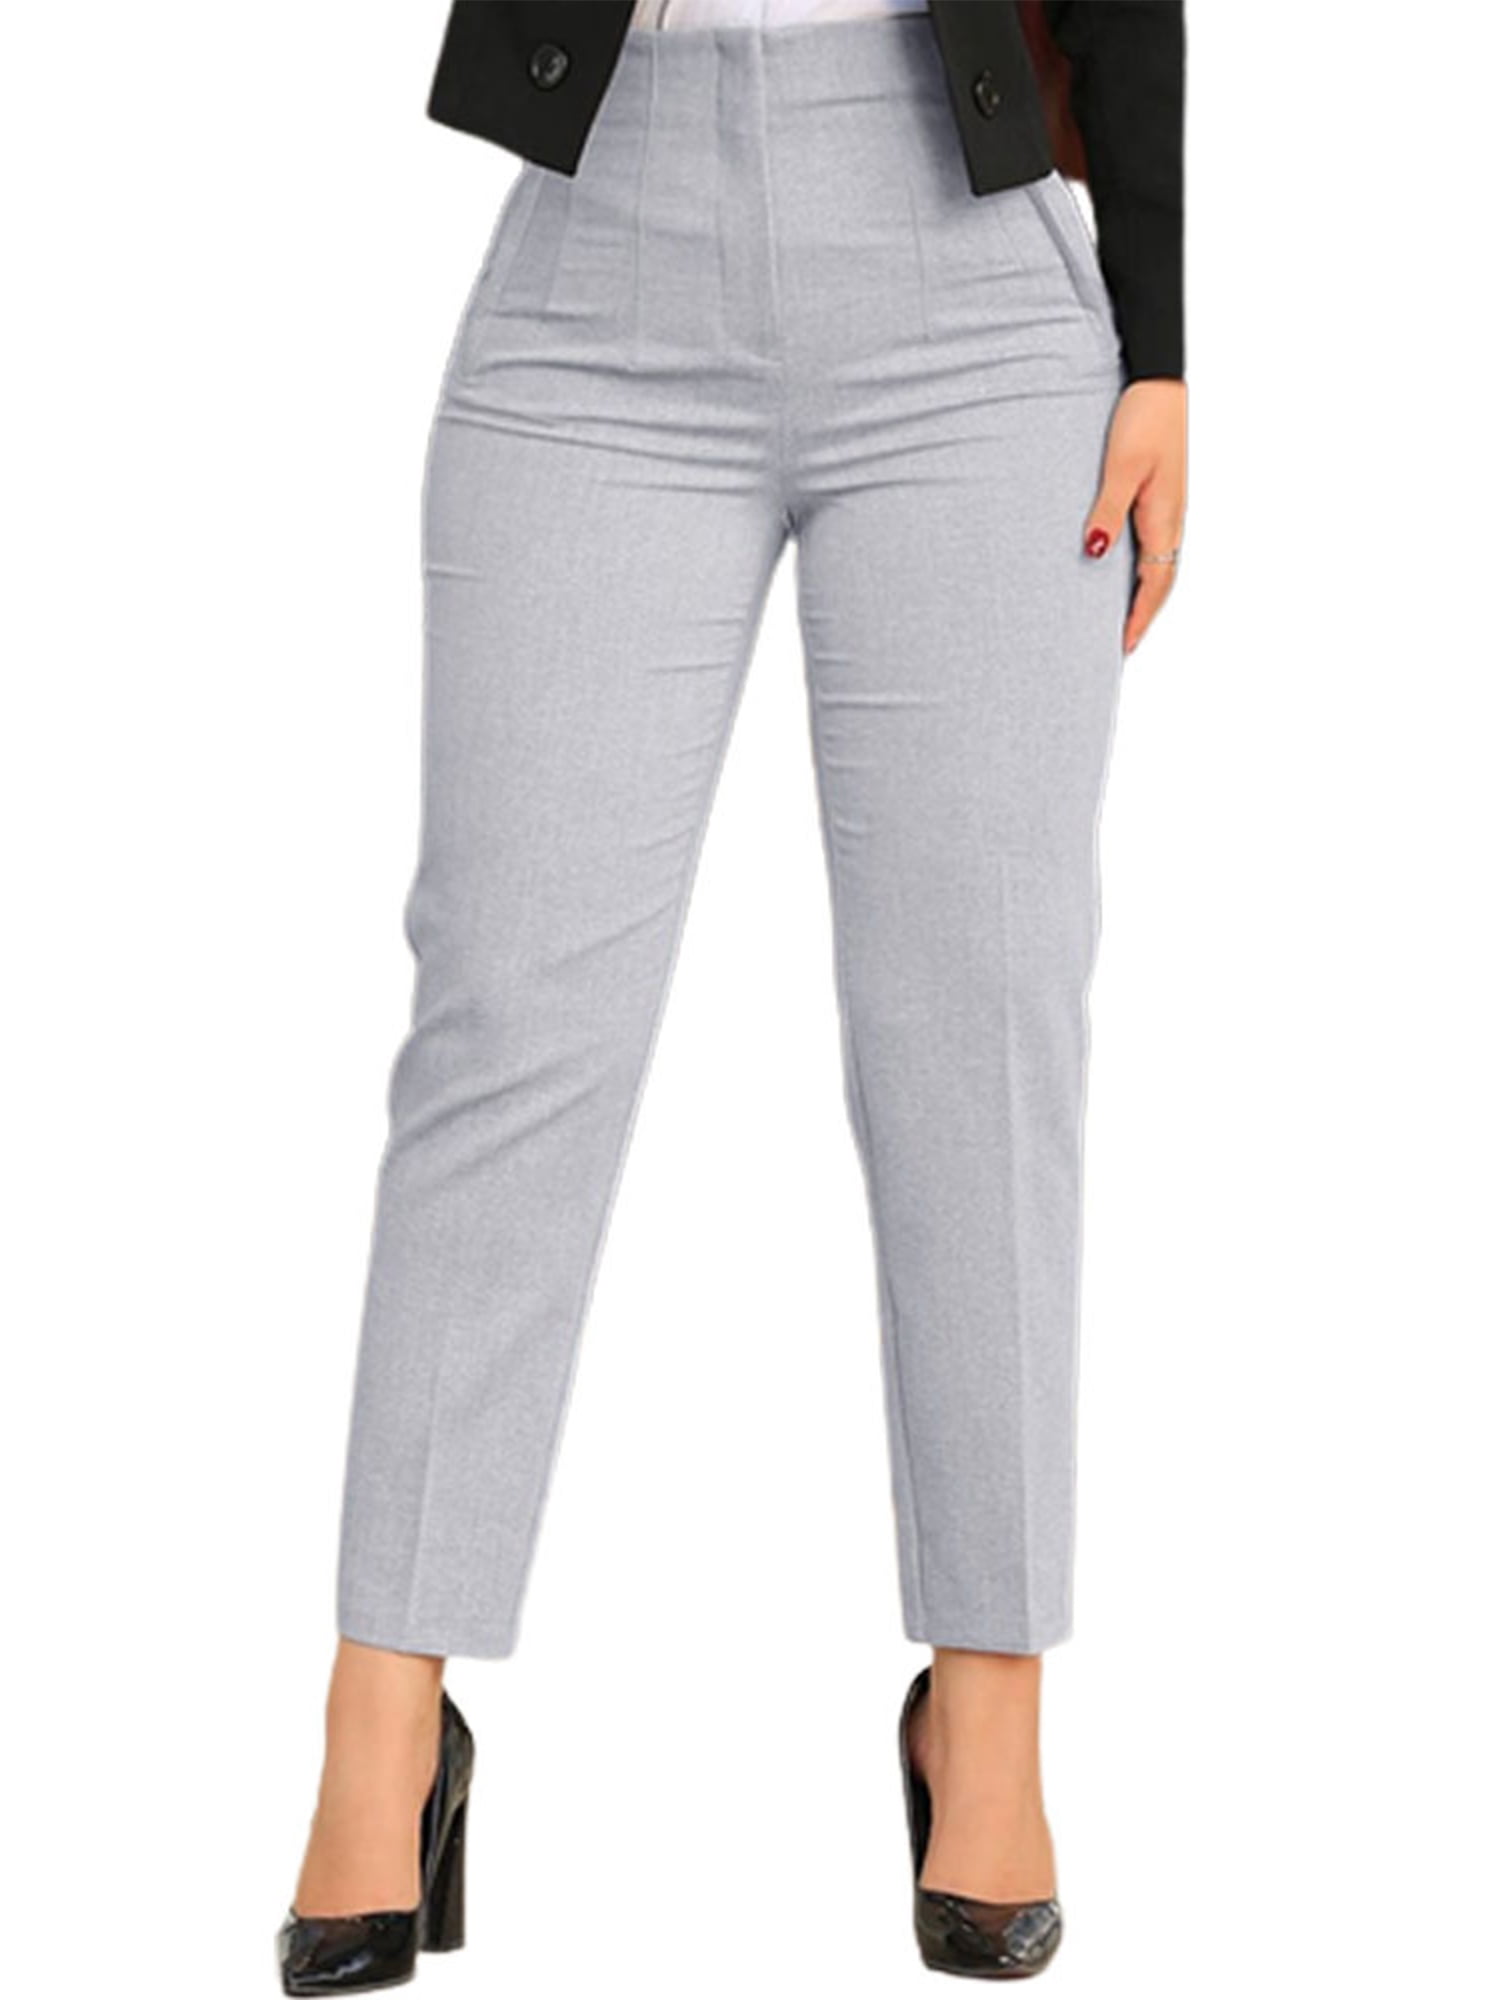 Capreze Dress Pants for Women High Waist Office Work Pant with Pockets  Casual Straight Leg Slacks Business Trousers Sky Blue XL